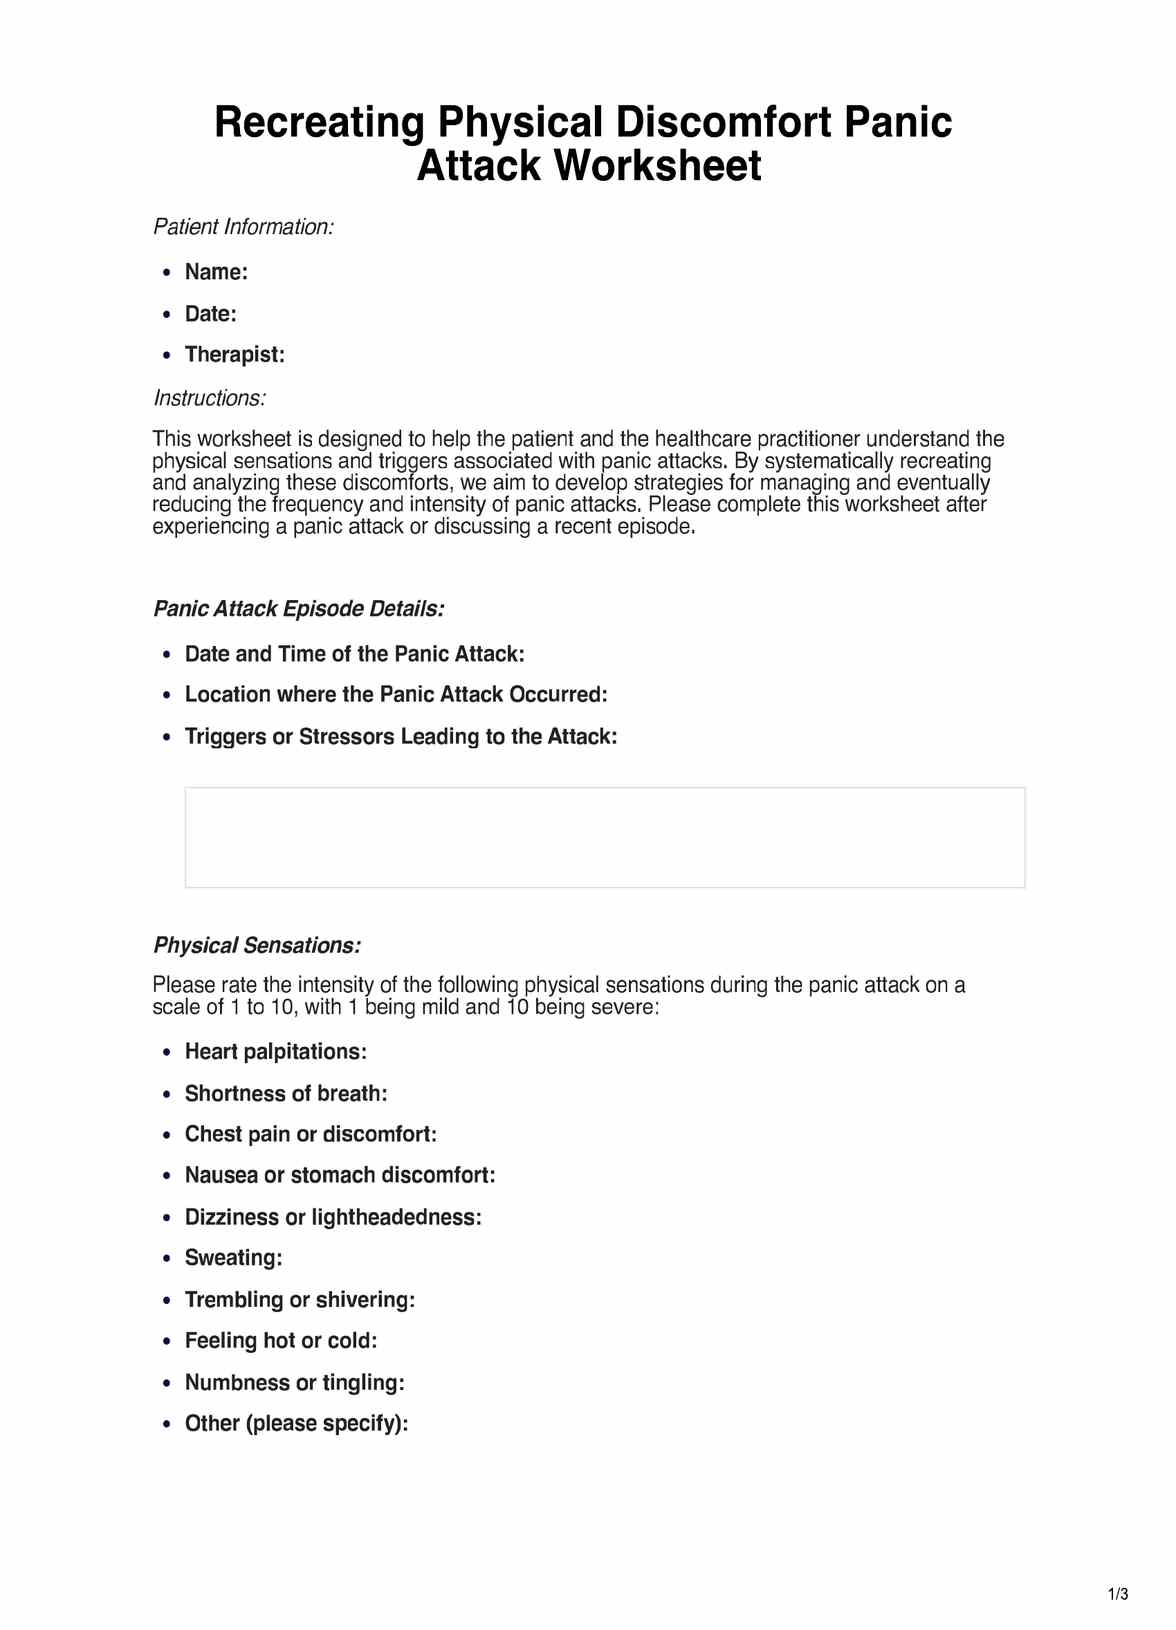 Recreating Physical Discomfort Panic Attack Worksheet PDF Example